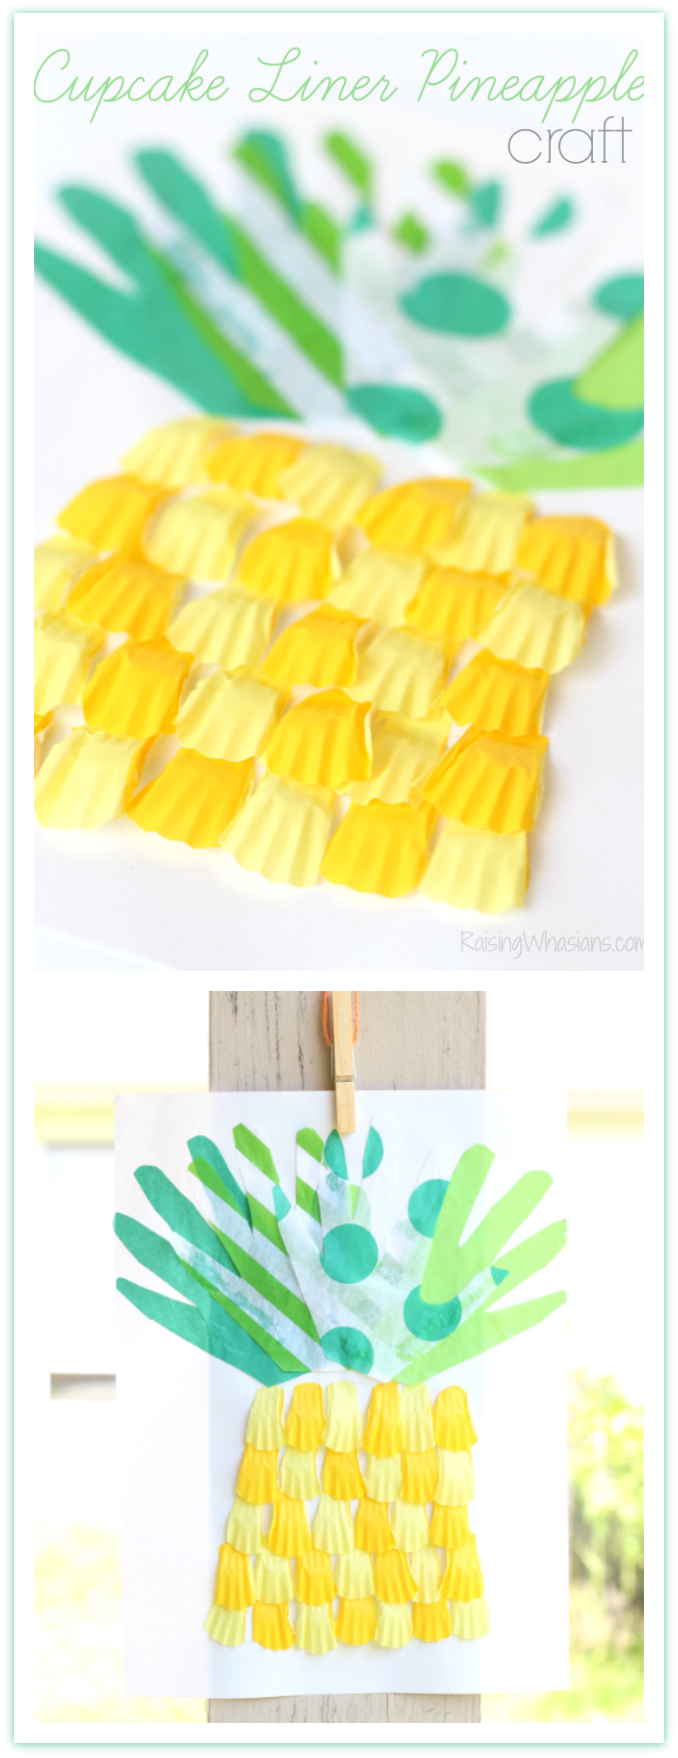 Cupcake liner pineapple craft